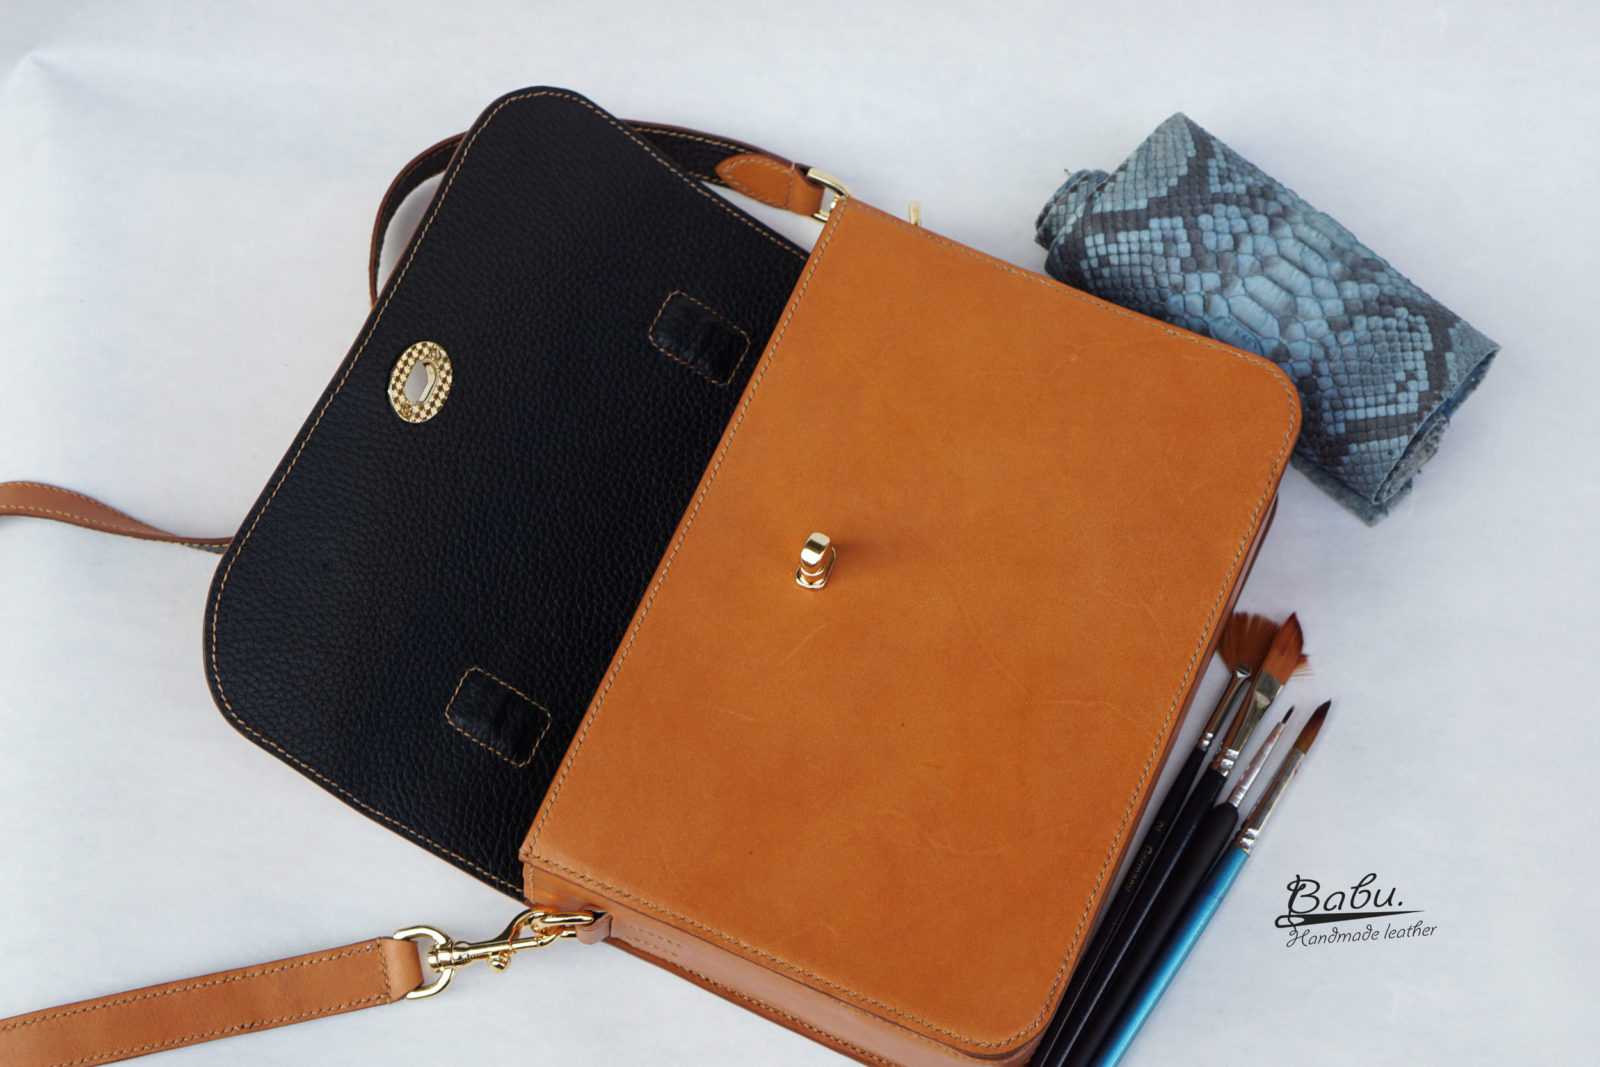 Handmade Vachetta leather handbag for Women MB028